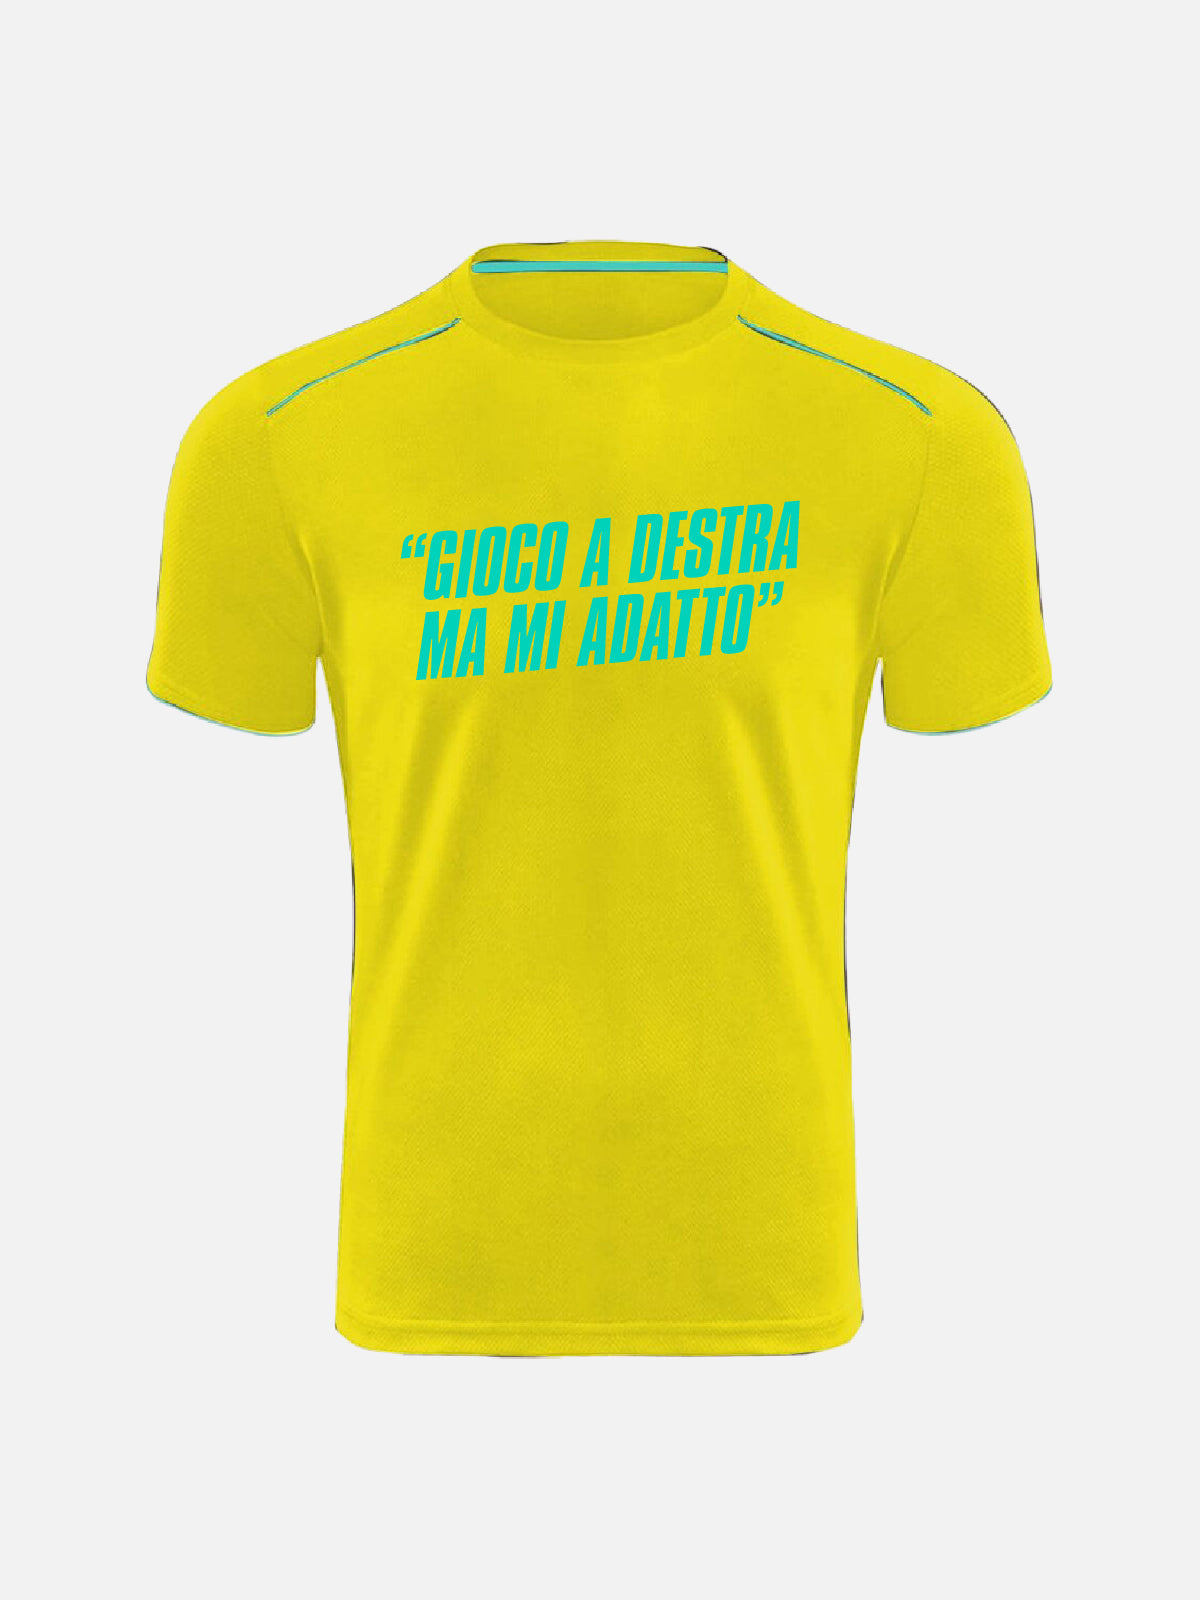 T-shirt -"I Play Right But I Adapt"